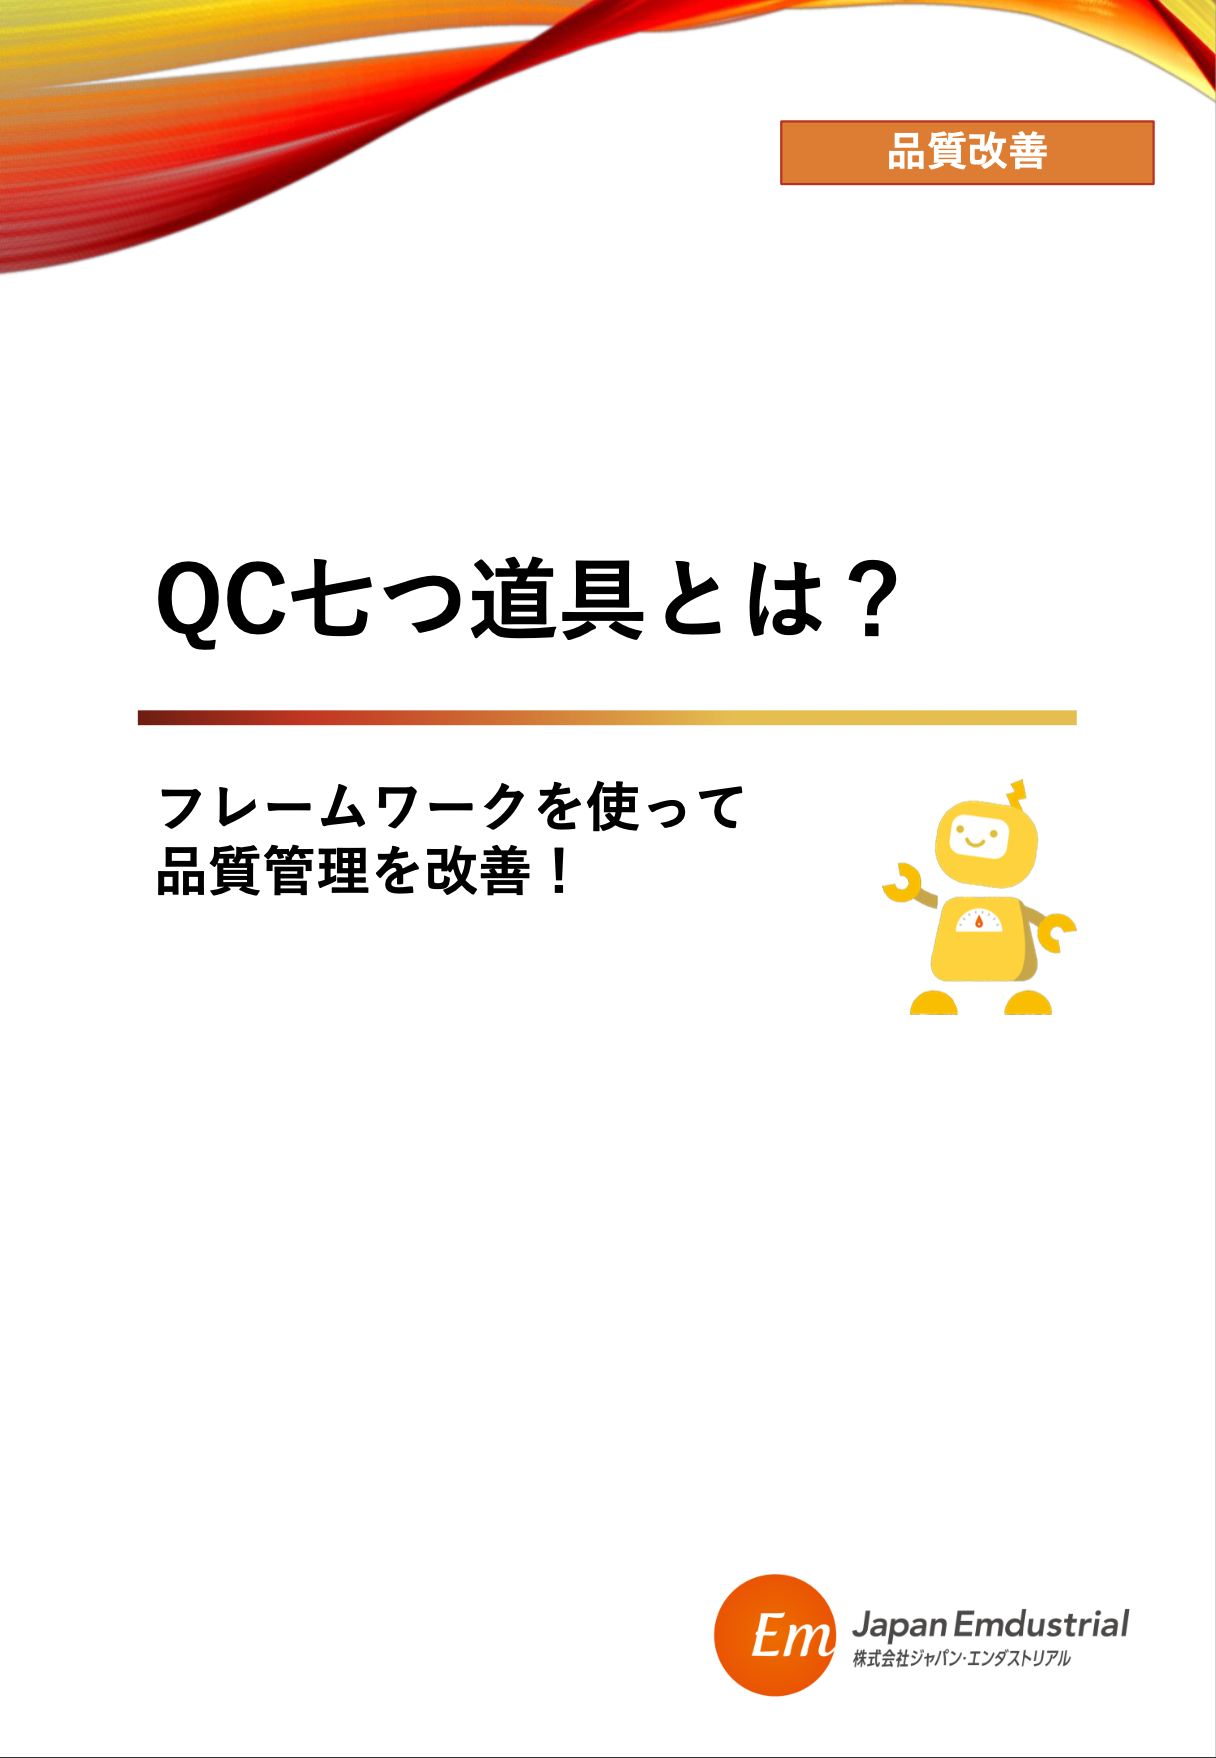 QC七つ道具とは？フレームワークを使って品質管理を改善！